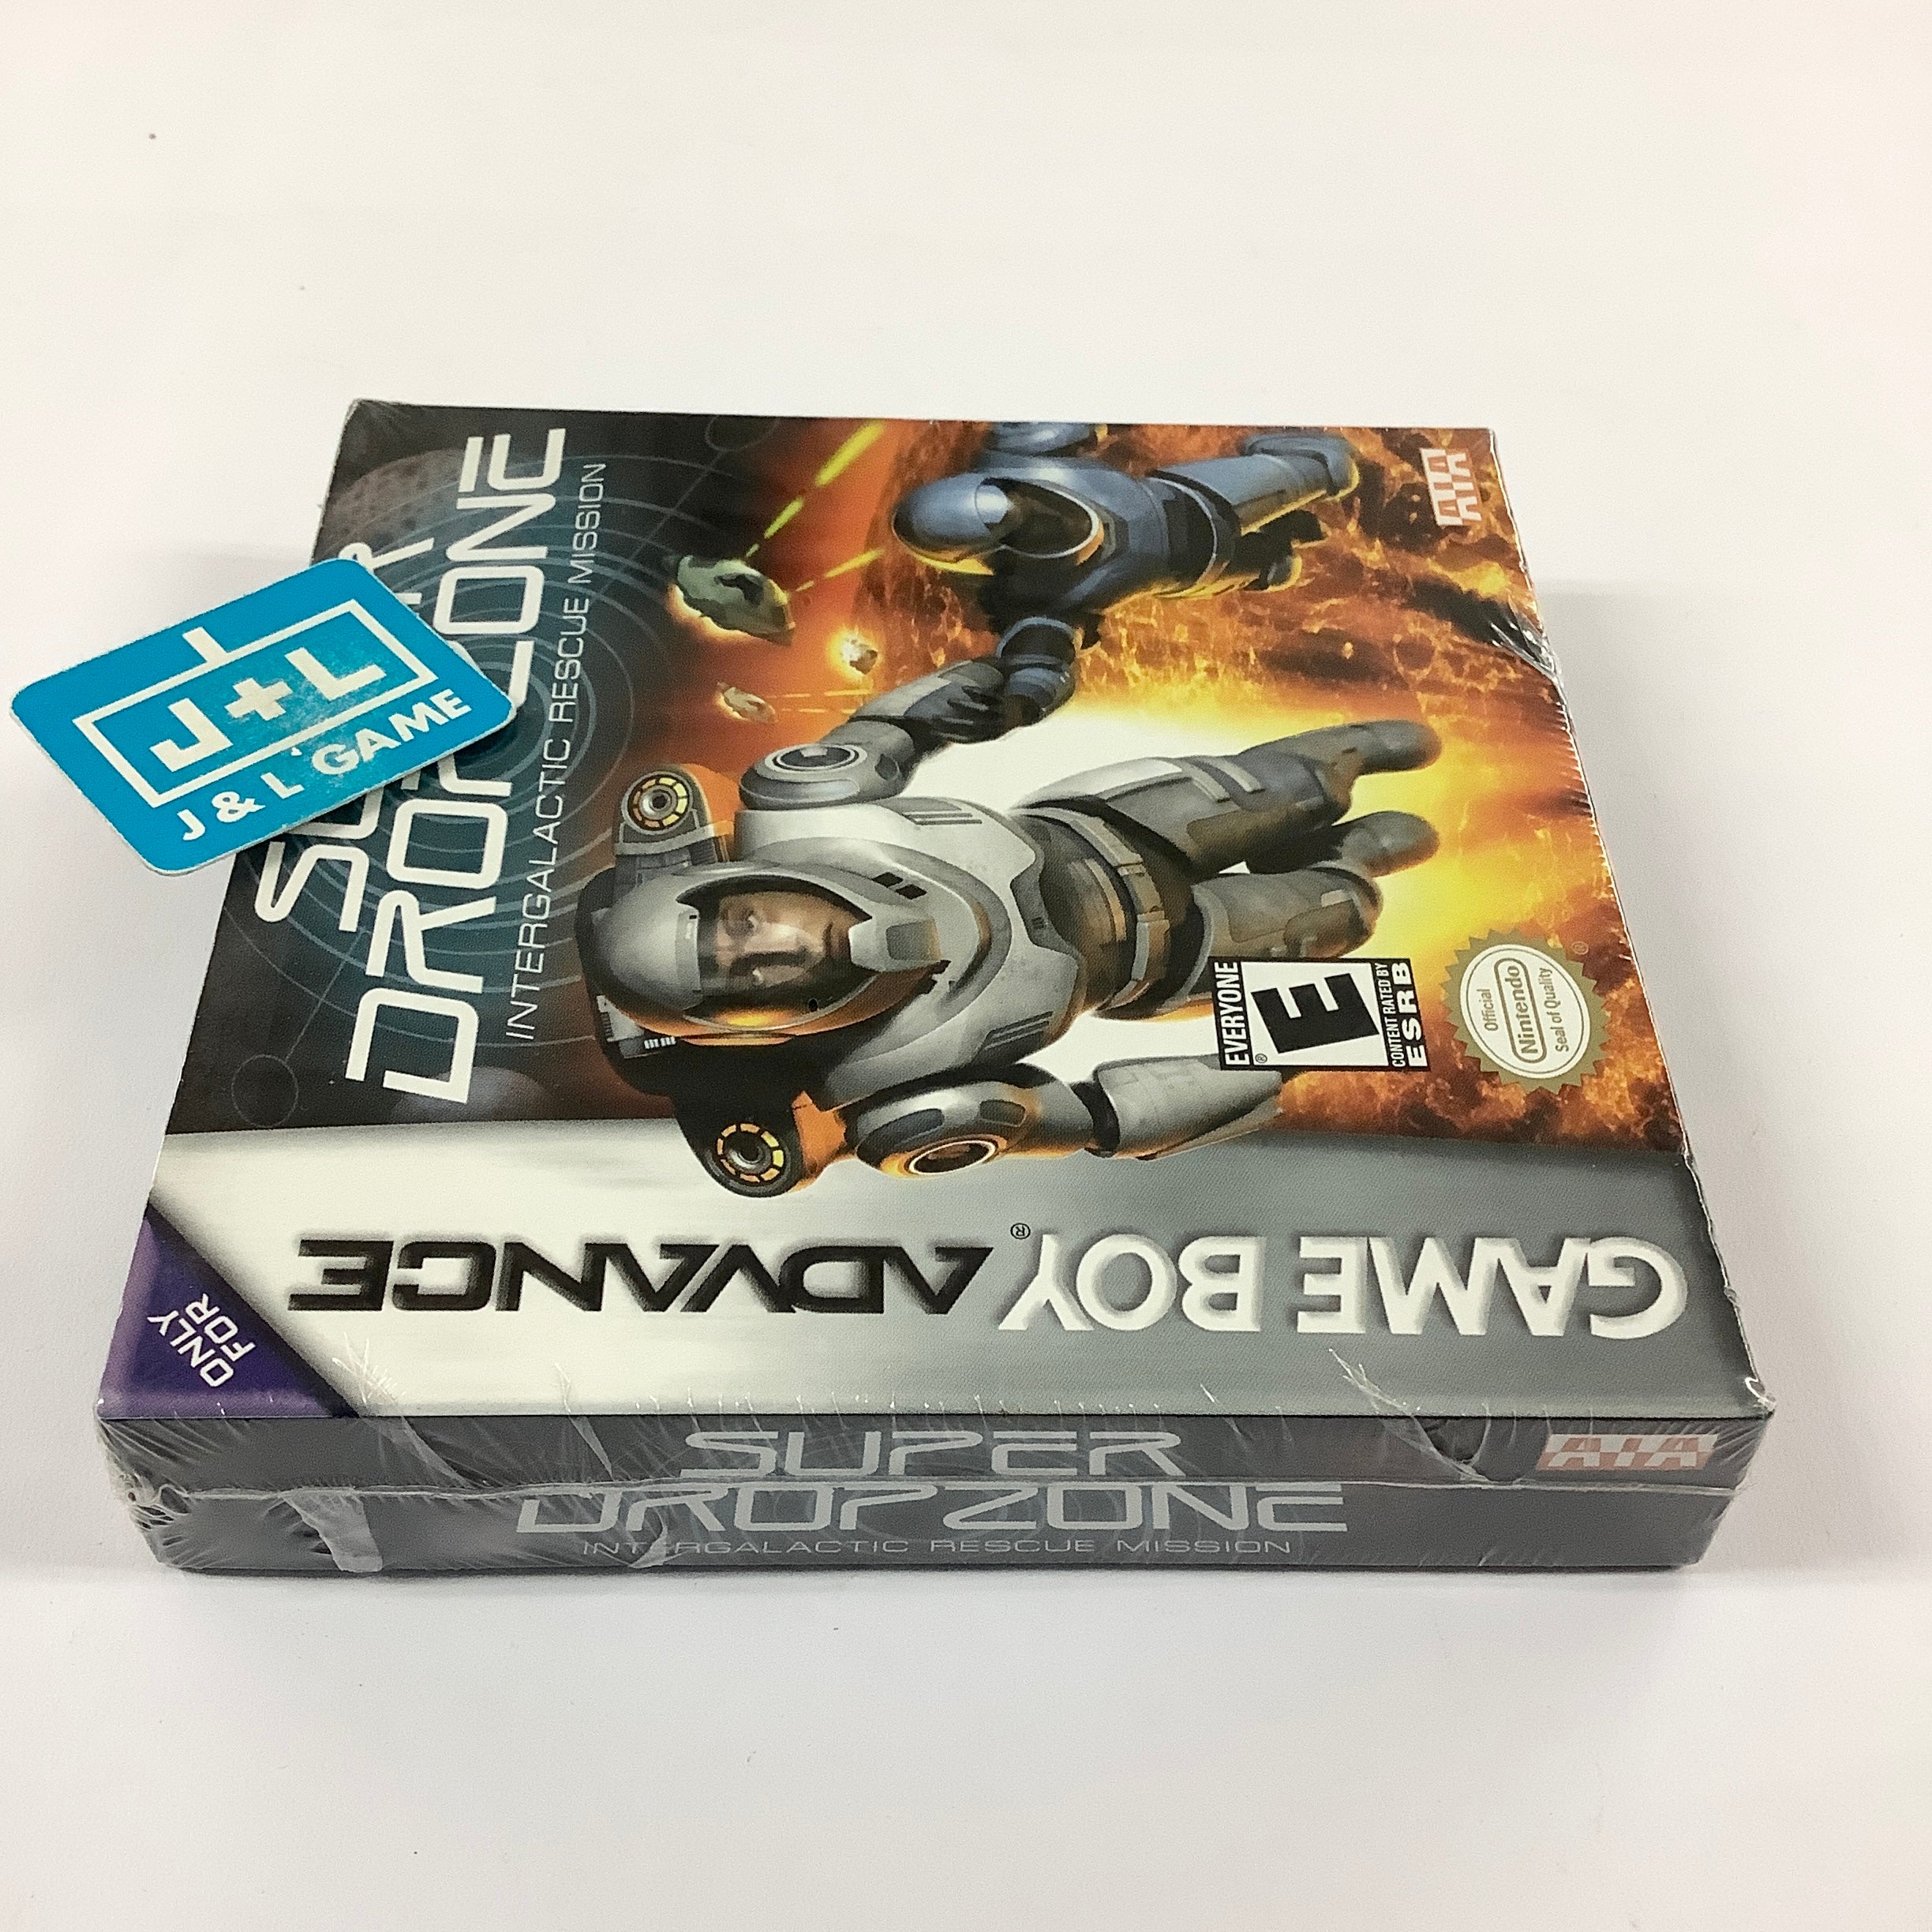 Super Dropzone: Intergalactic Rescue Mission - (GBA) Game Boy Advance Video Games Ignition Entertainment   